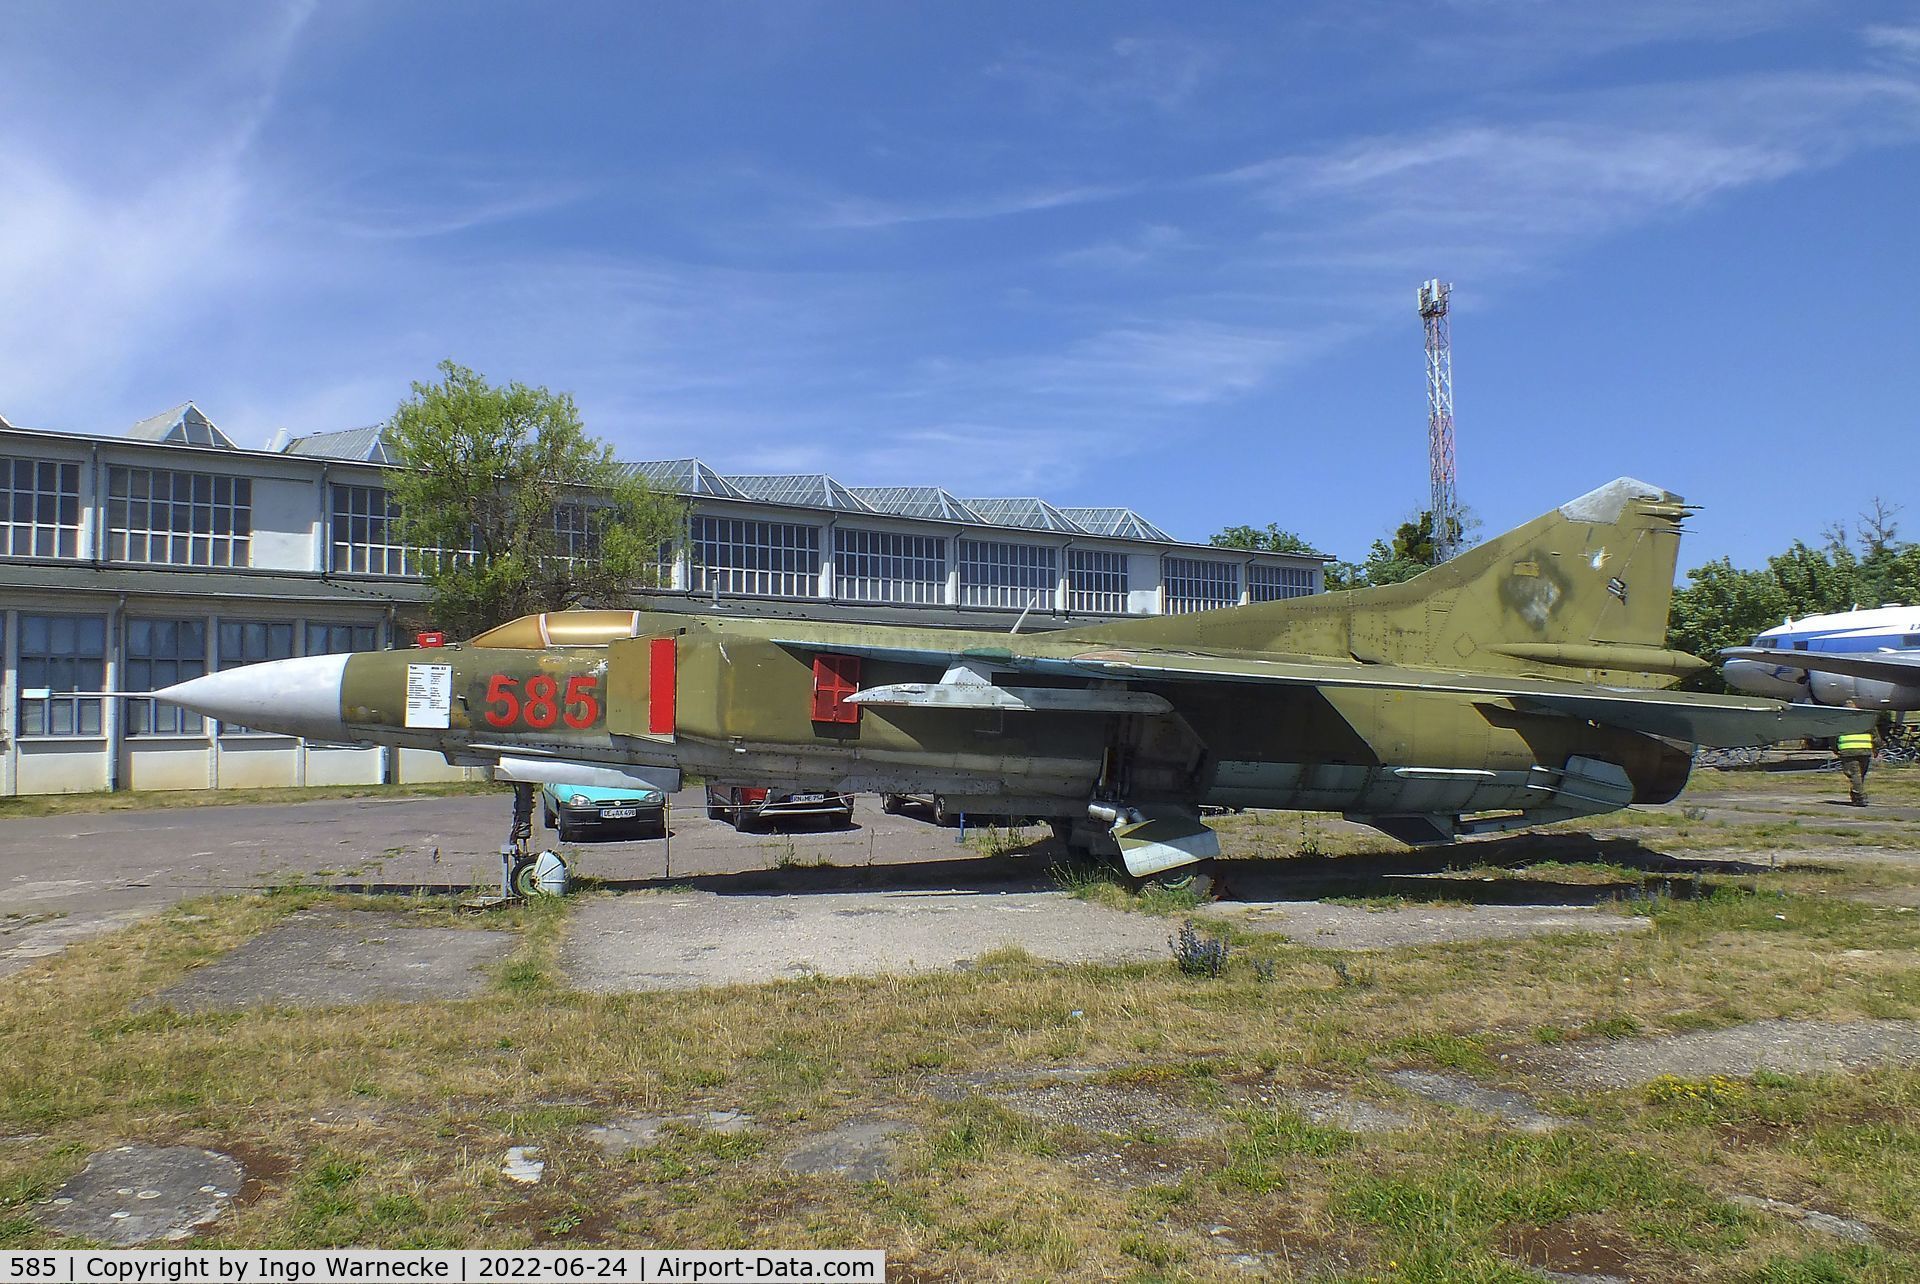 585, 1978 Mikoyan-Gurevich MiG-23MF C/N 03902 13100, Mikoyan i Gurevich MiG-23MF FLOGGER-B at the Technikmuseum Hugo Junkers, Dessau